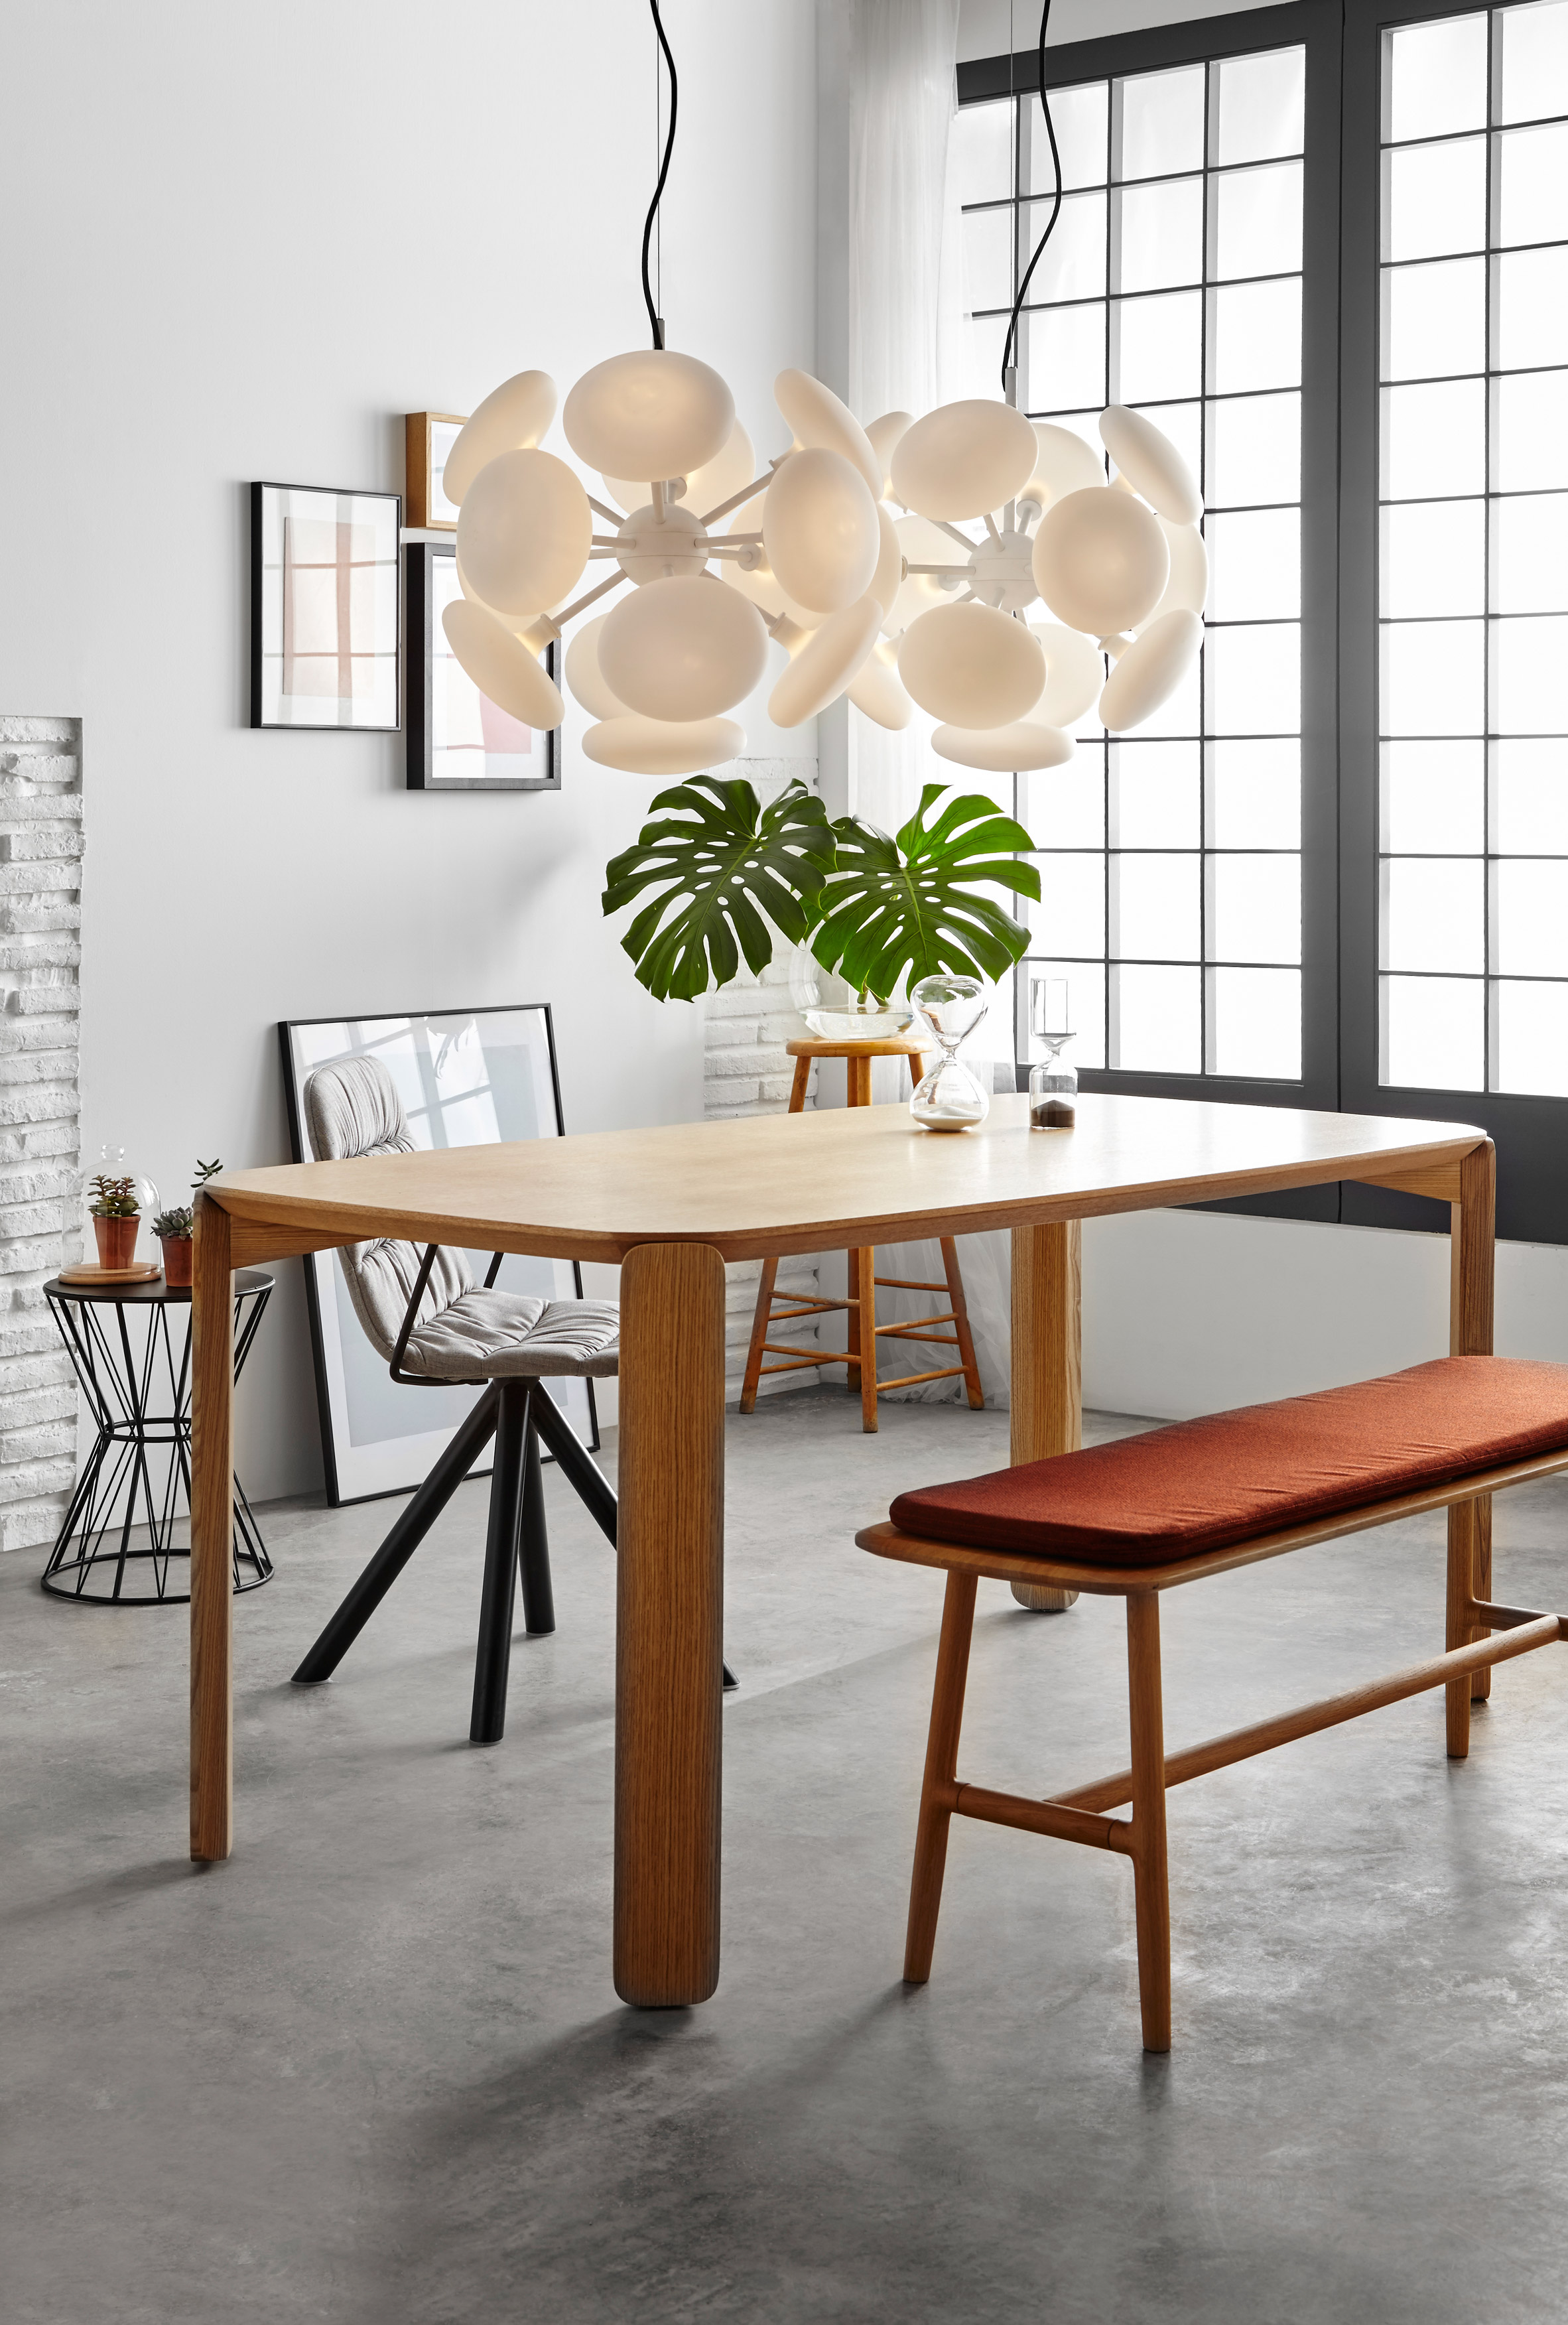 45-table-system-inyard-la-selva-design-furniture_dezeen_2364_col_14